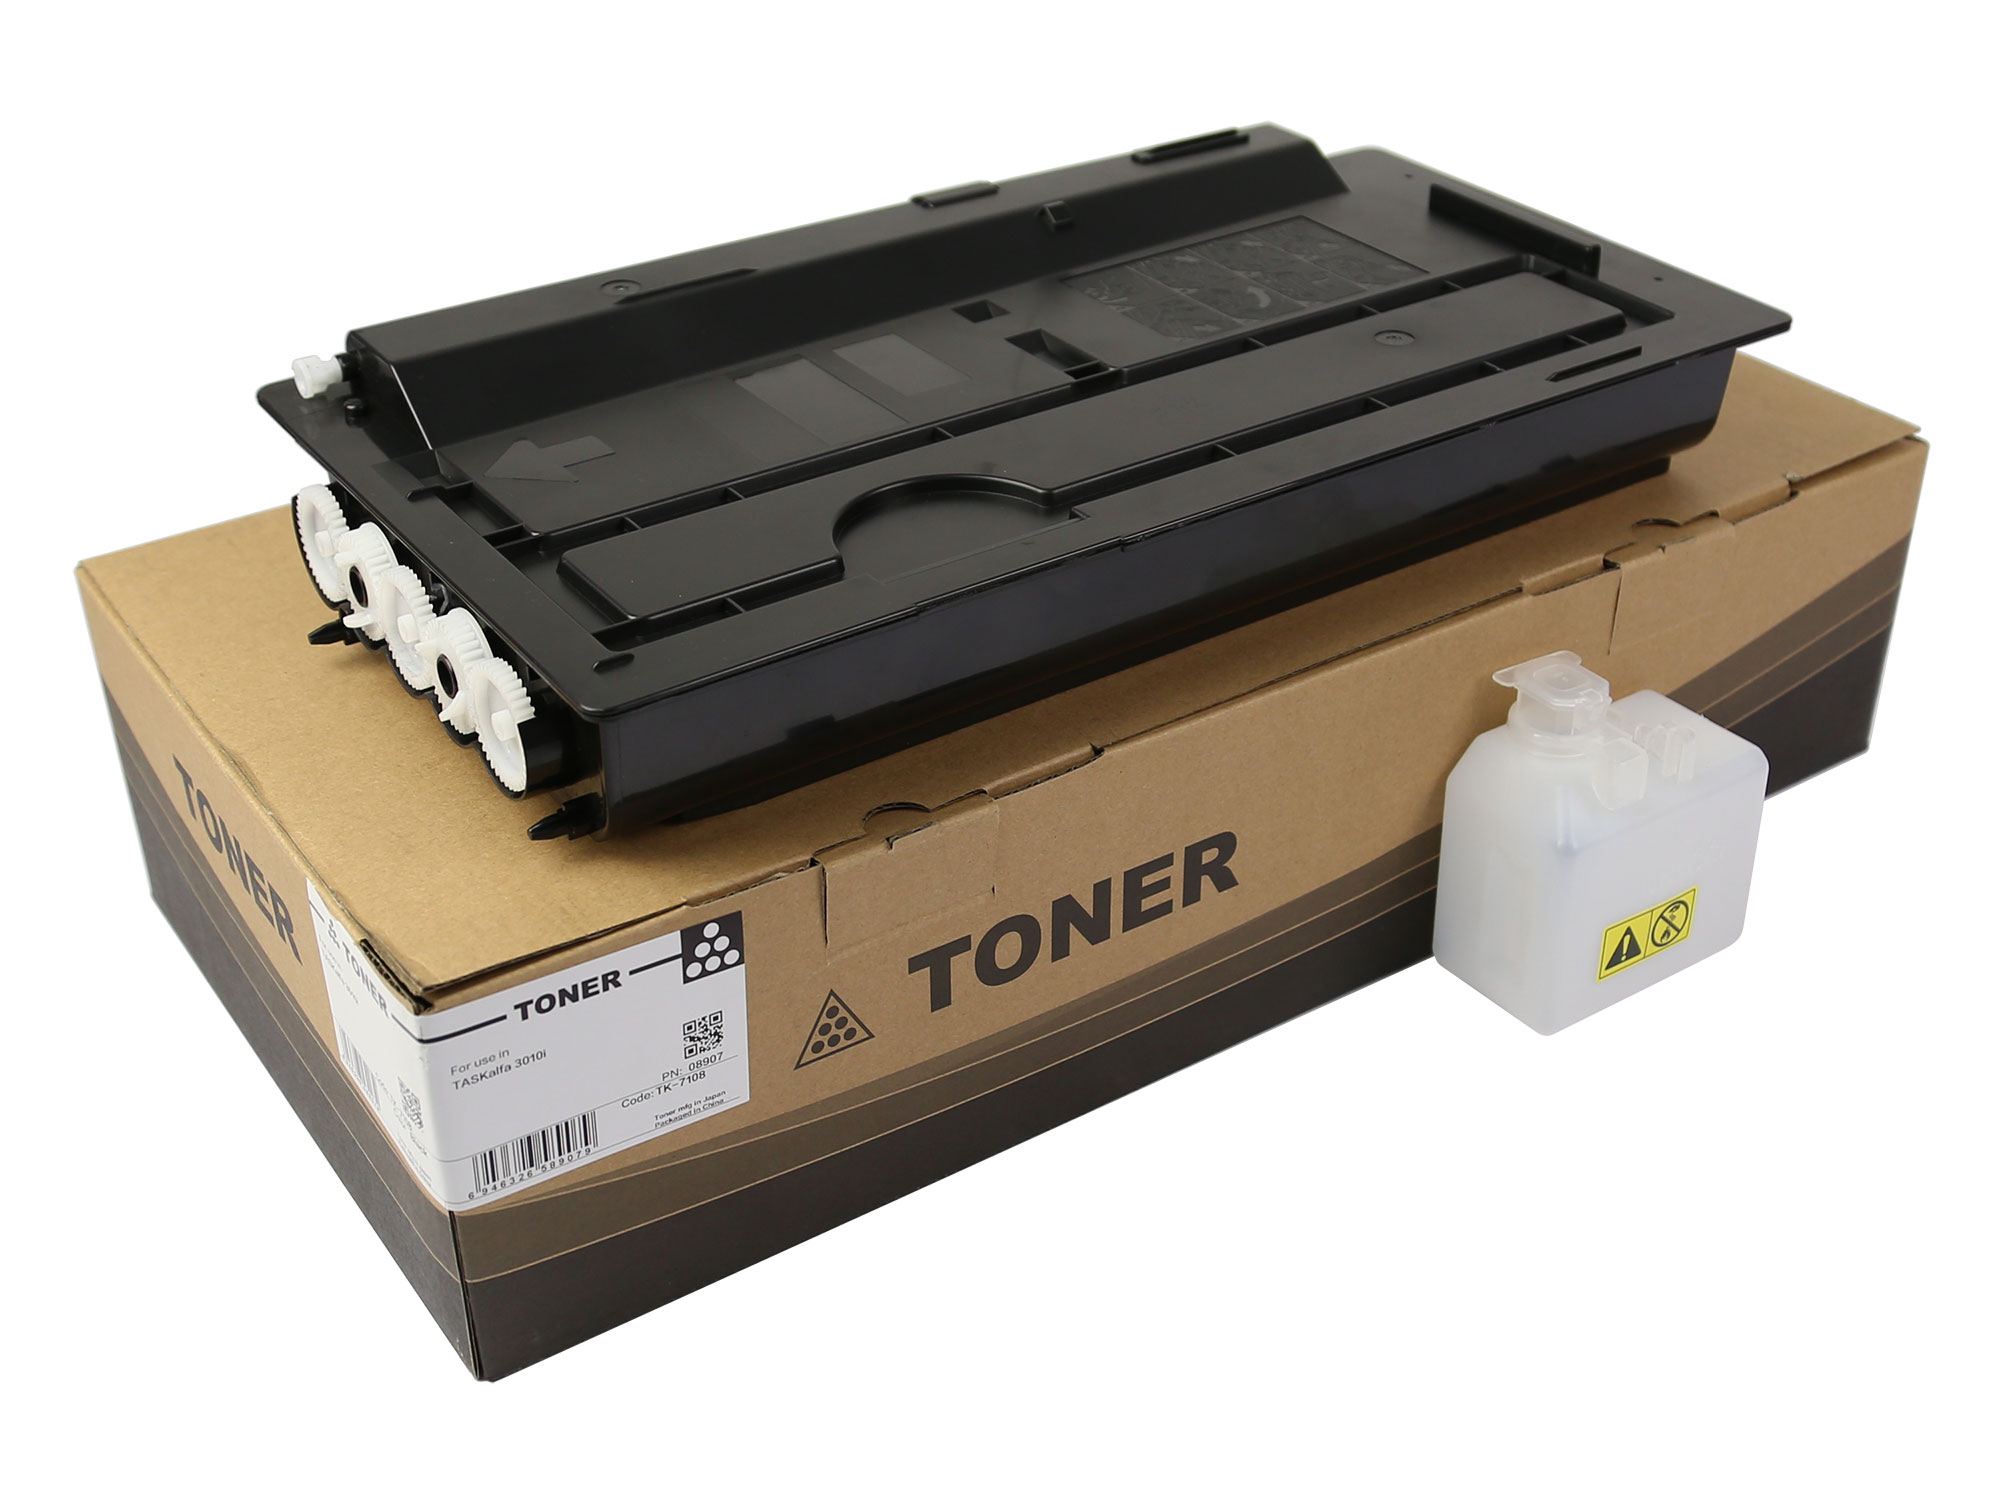 TK-7108 Toner Cartridge for Kyocera TASKalfa 3010i